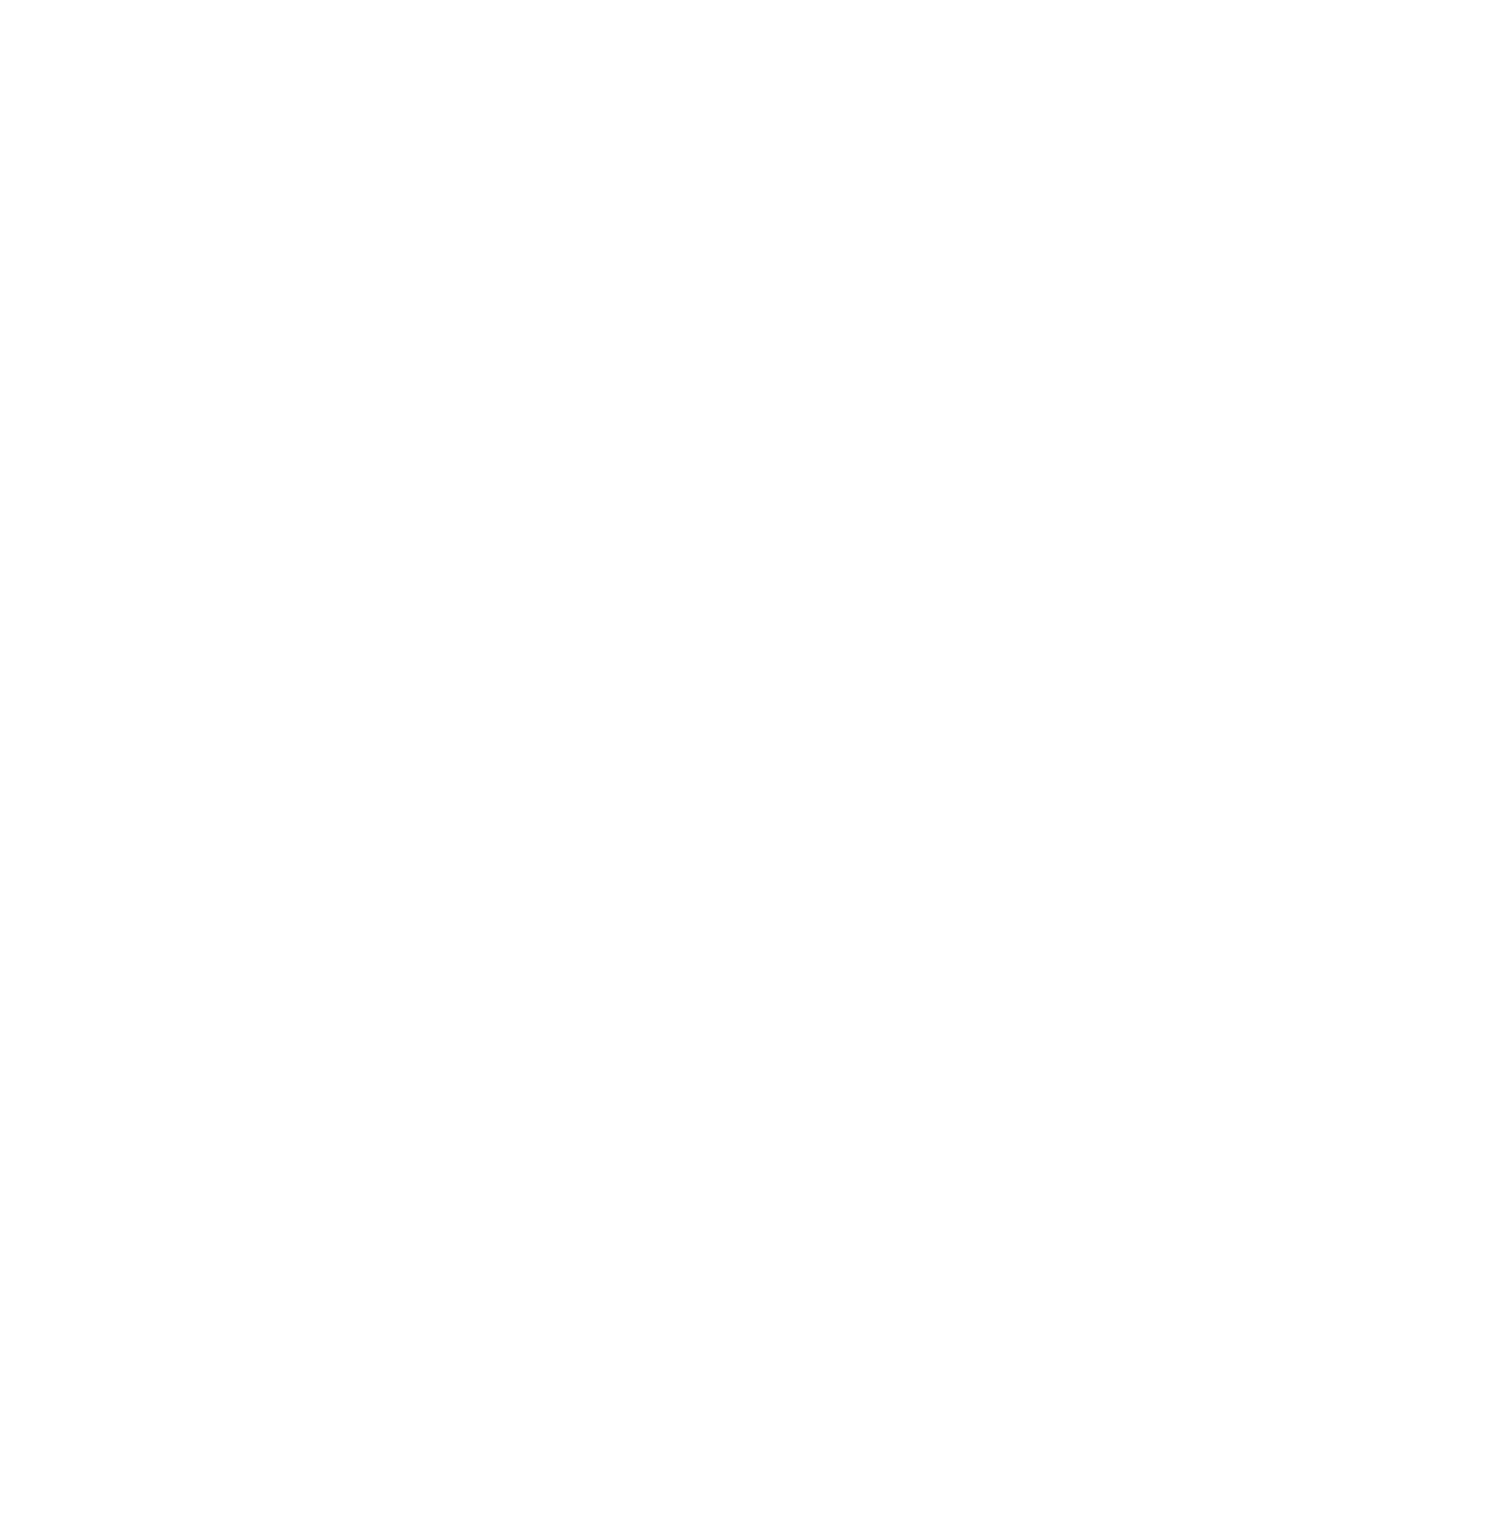 Krung Thai Bank logo for dark backgrounds (transparent PNG)